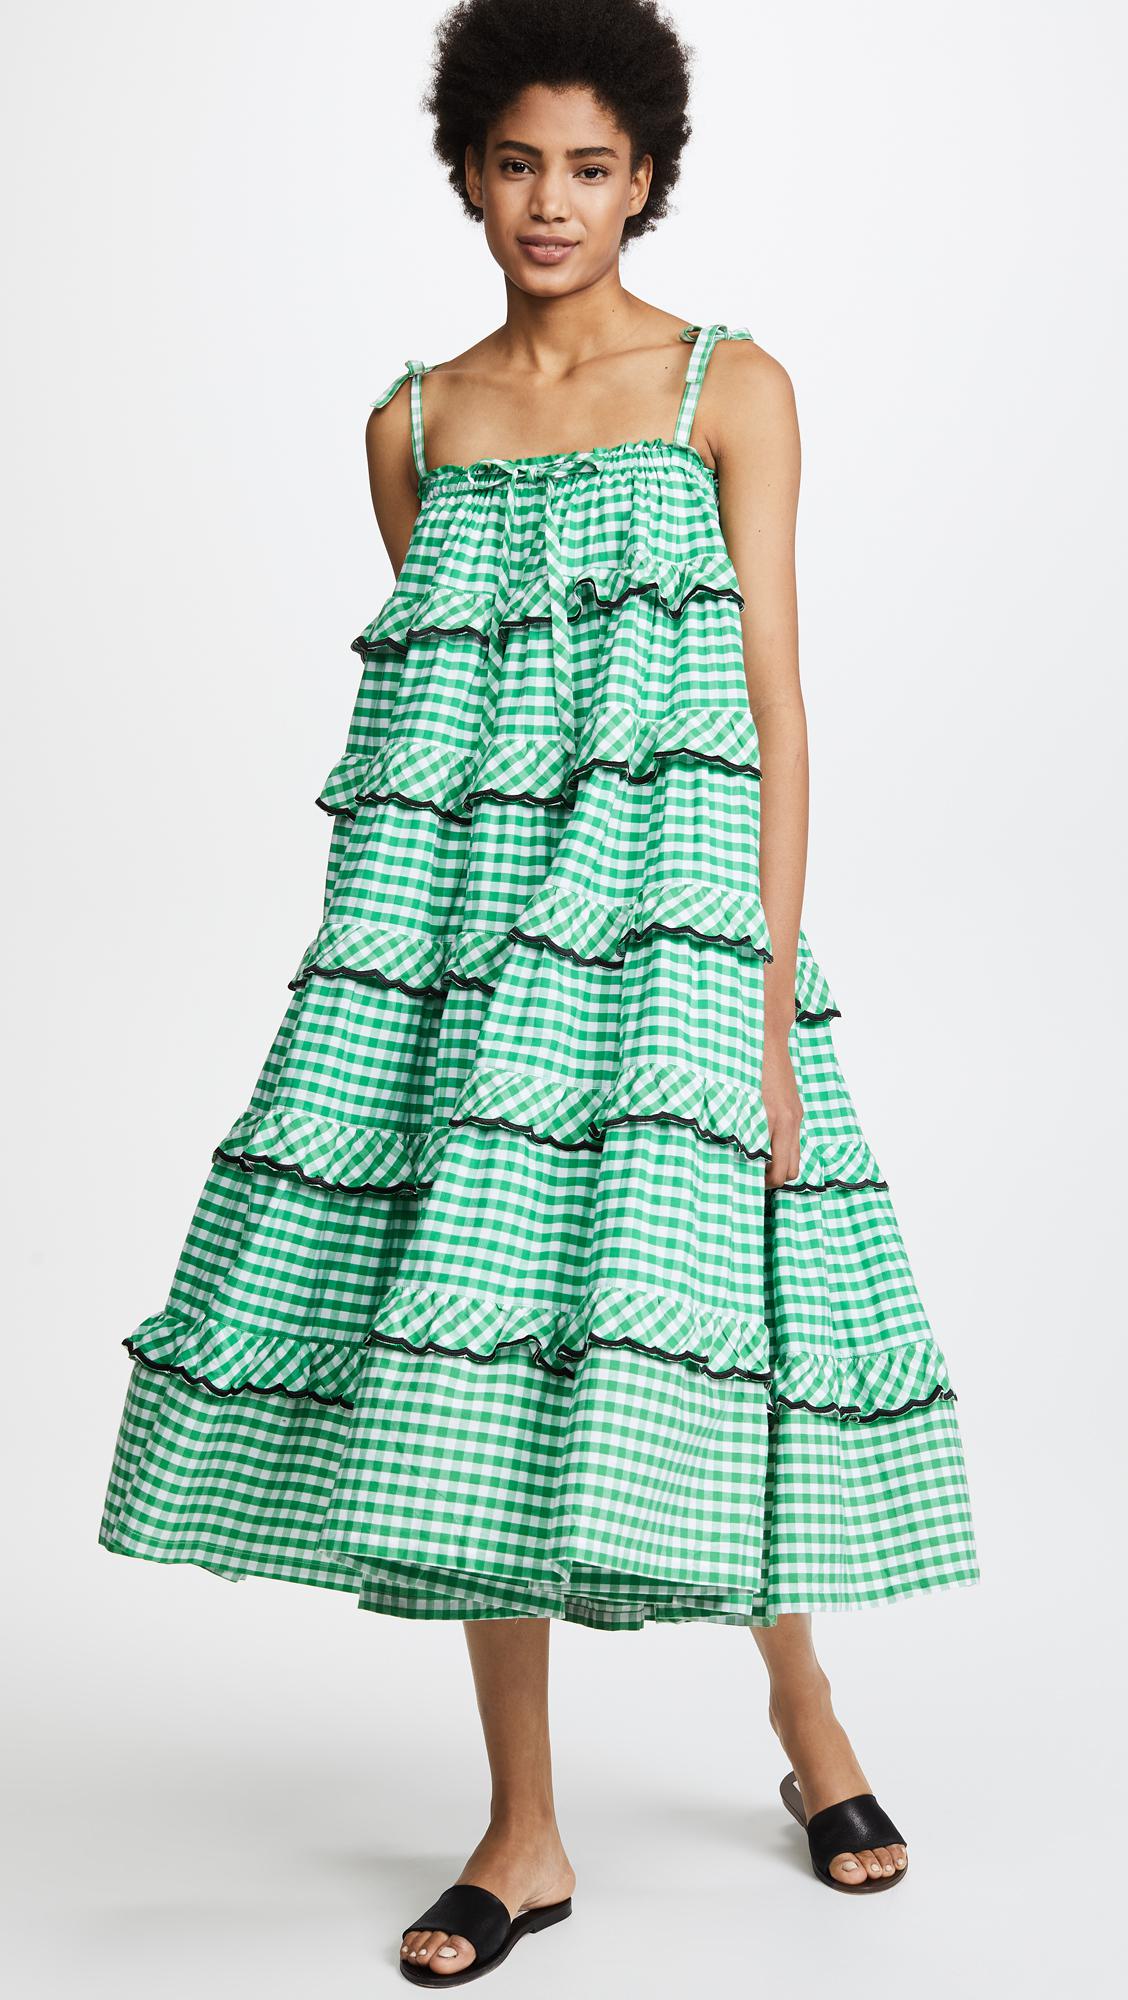 Lyst - Innika Choo Gingham Frill Dress in Green